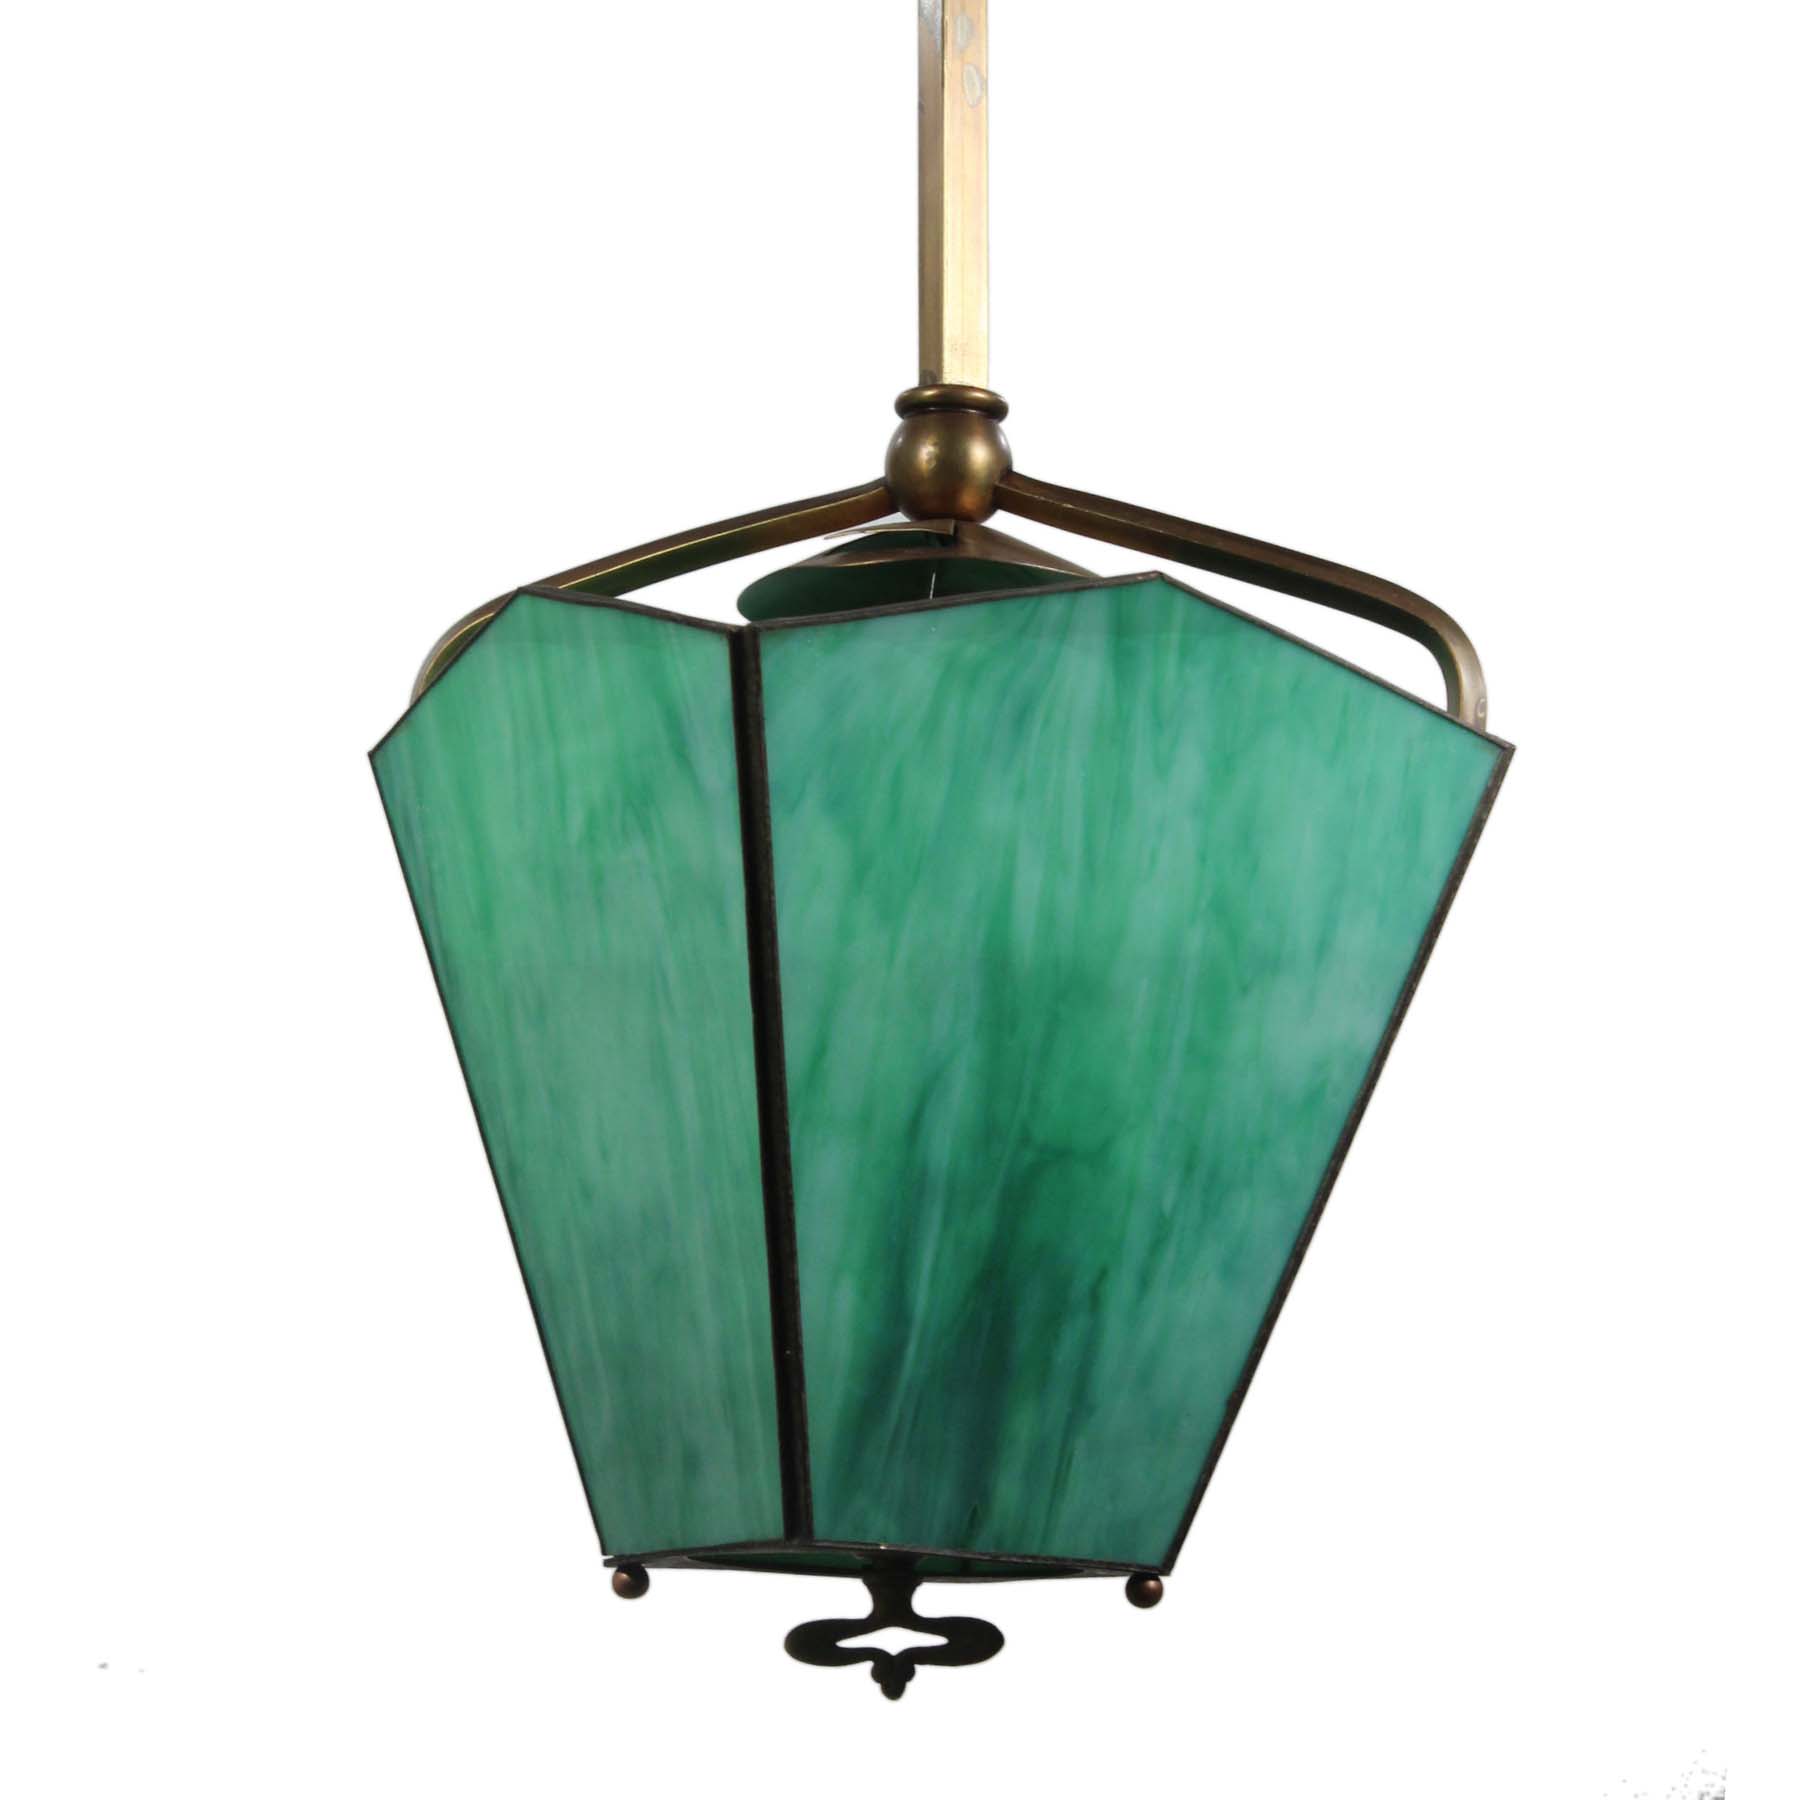 Antique Brass Gas Lantern, Green Slag Glass-72406